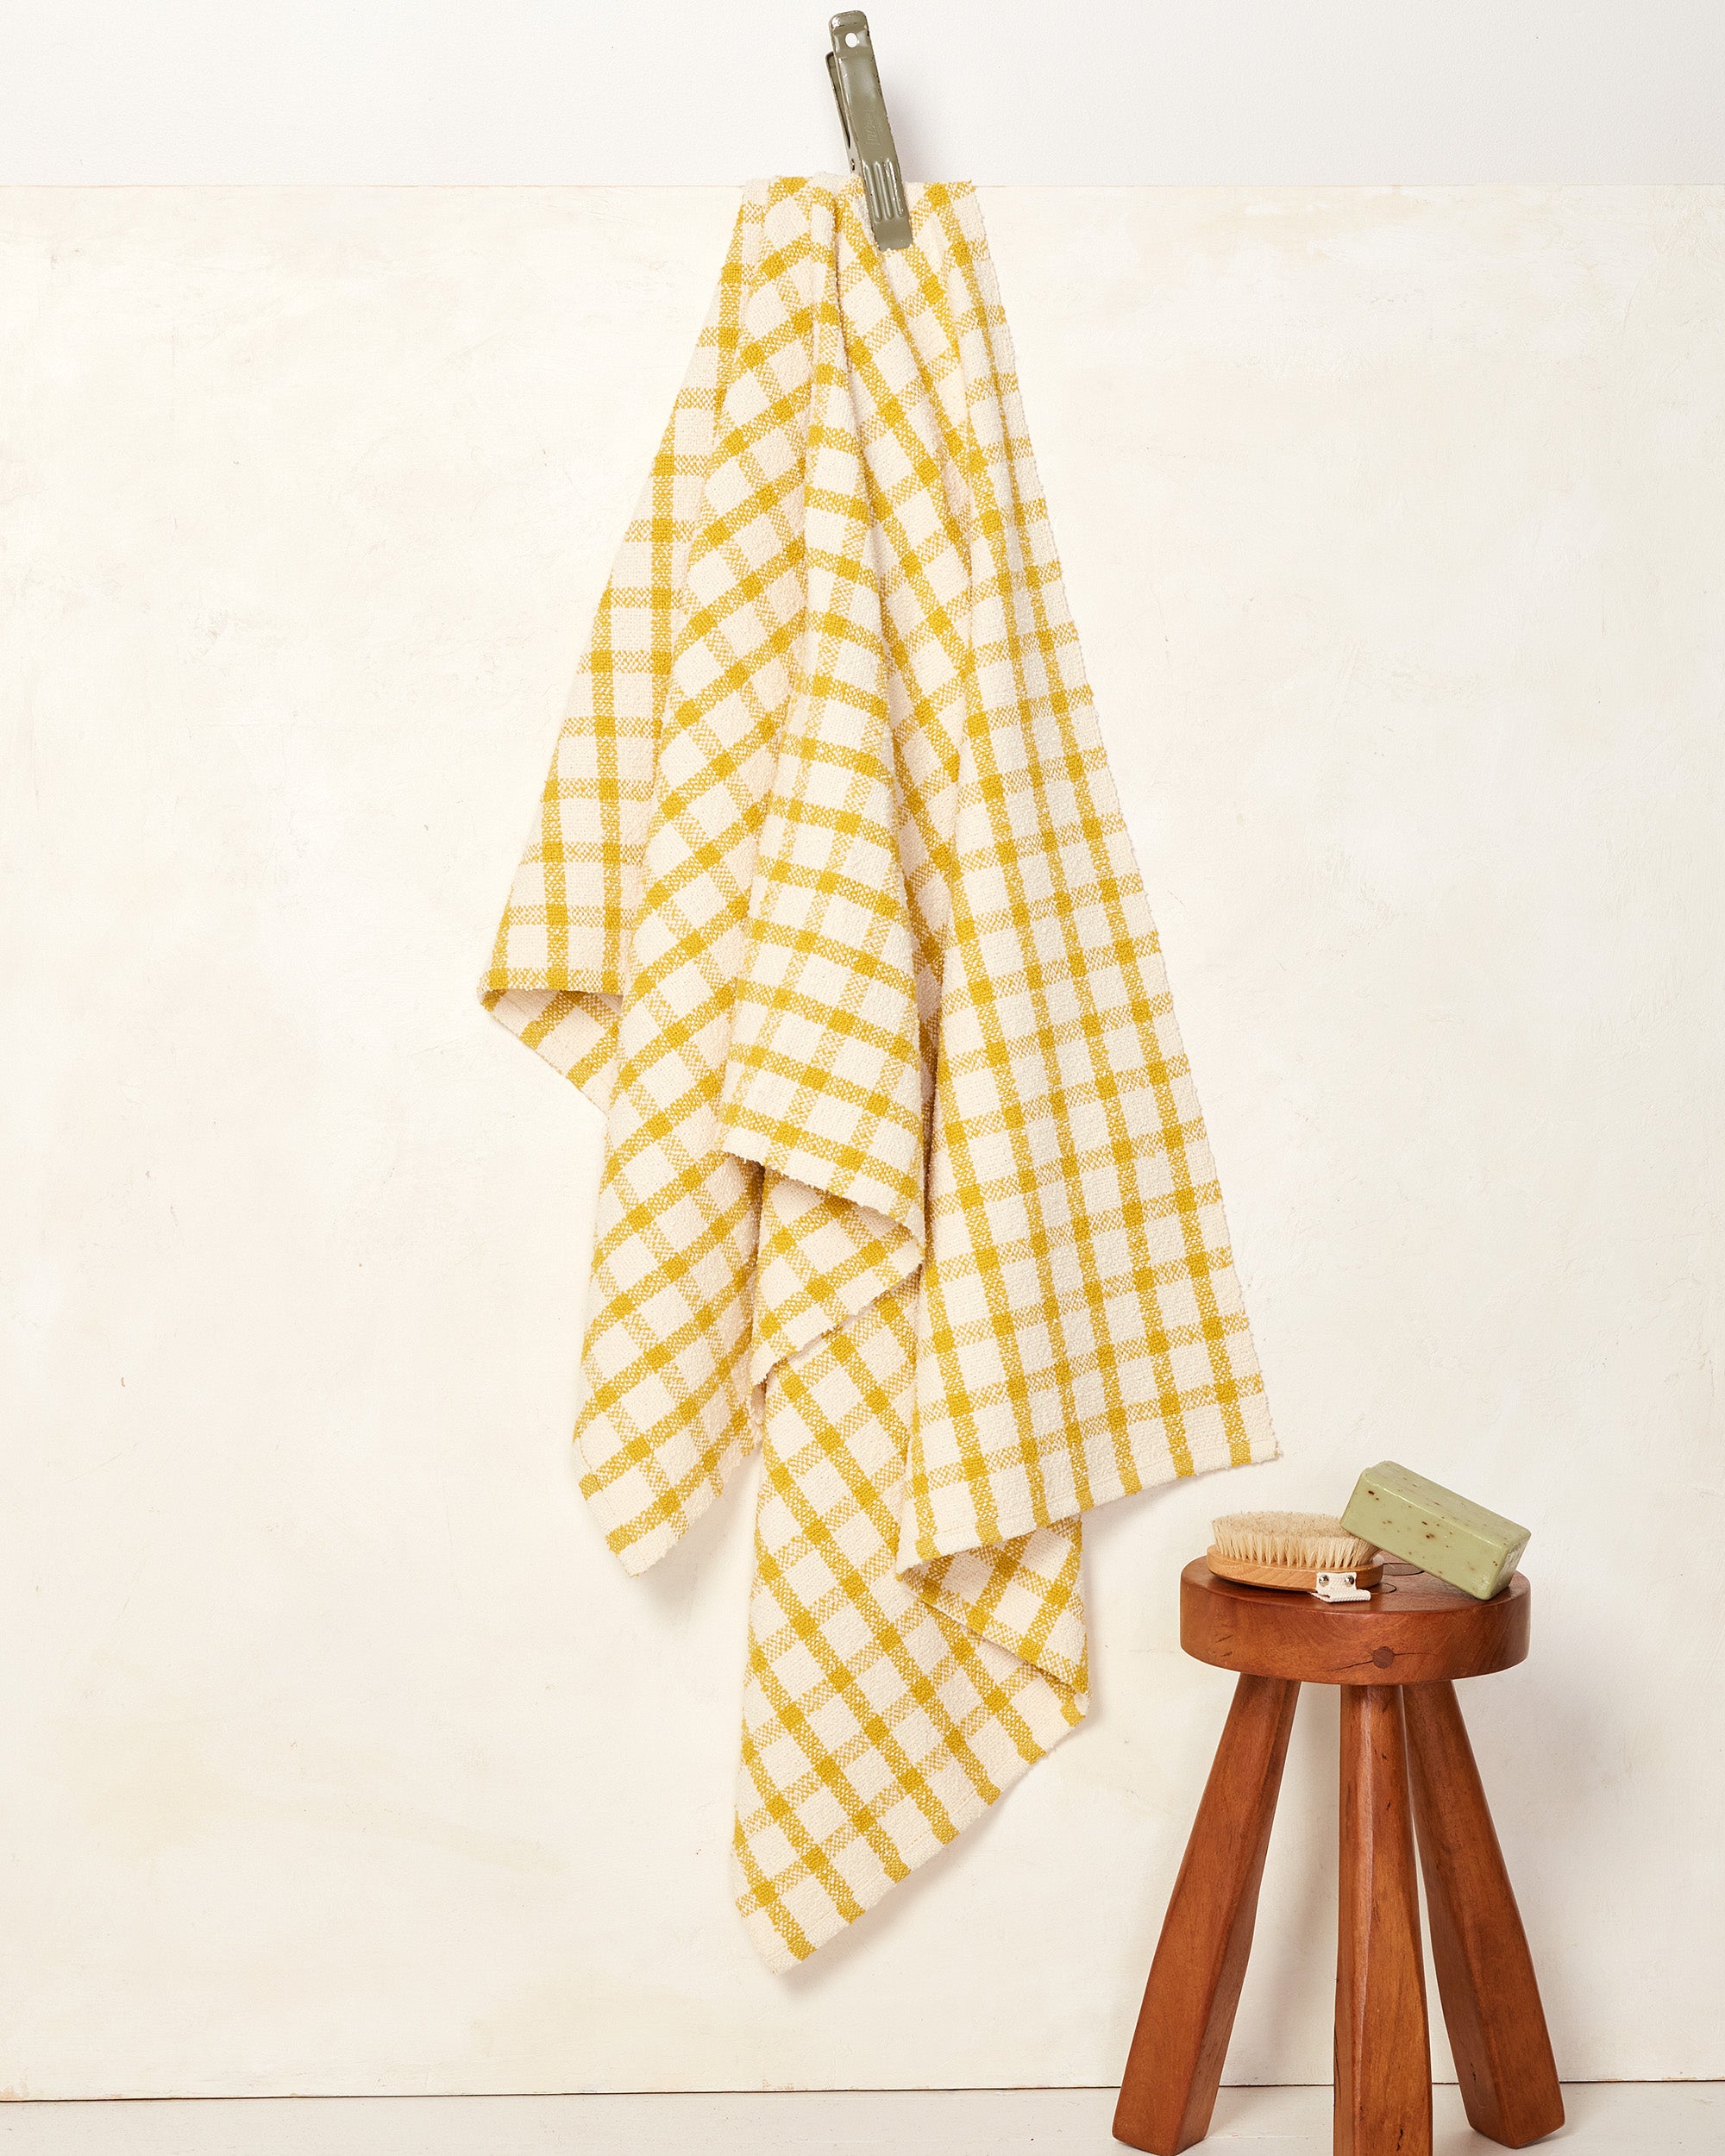 Buffalo Plaid 100% Cotton Tea Towels Bulk for Kitchen Dishes Washcloth  Napkin Bath Hand Towel Set